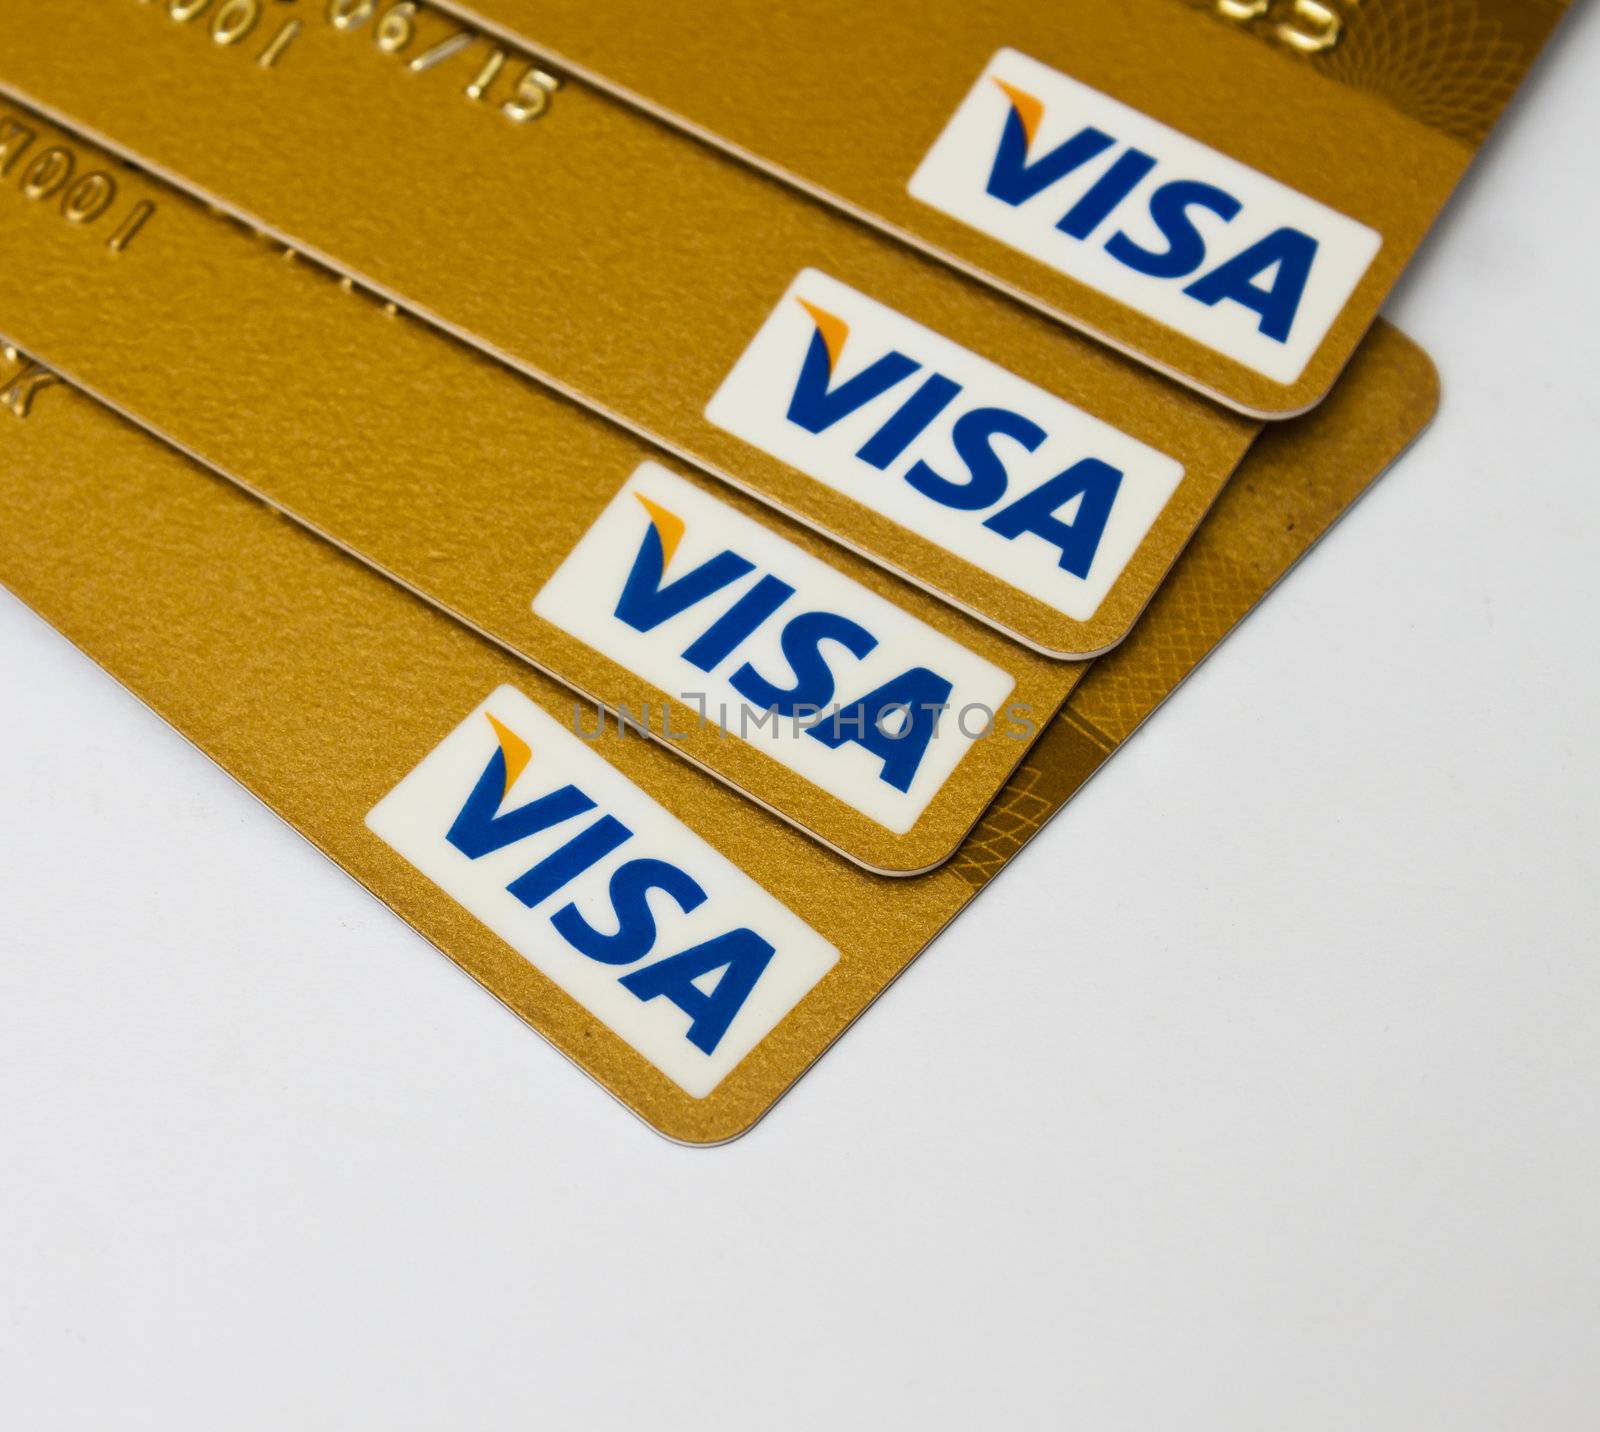 Visa Credit cards for ease of transaction.